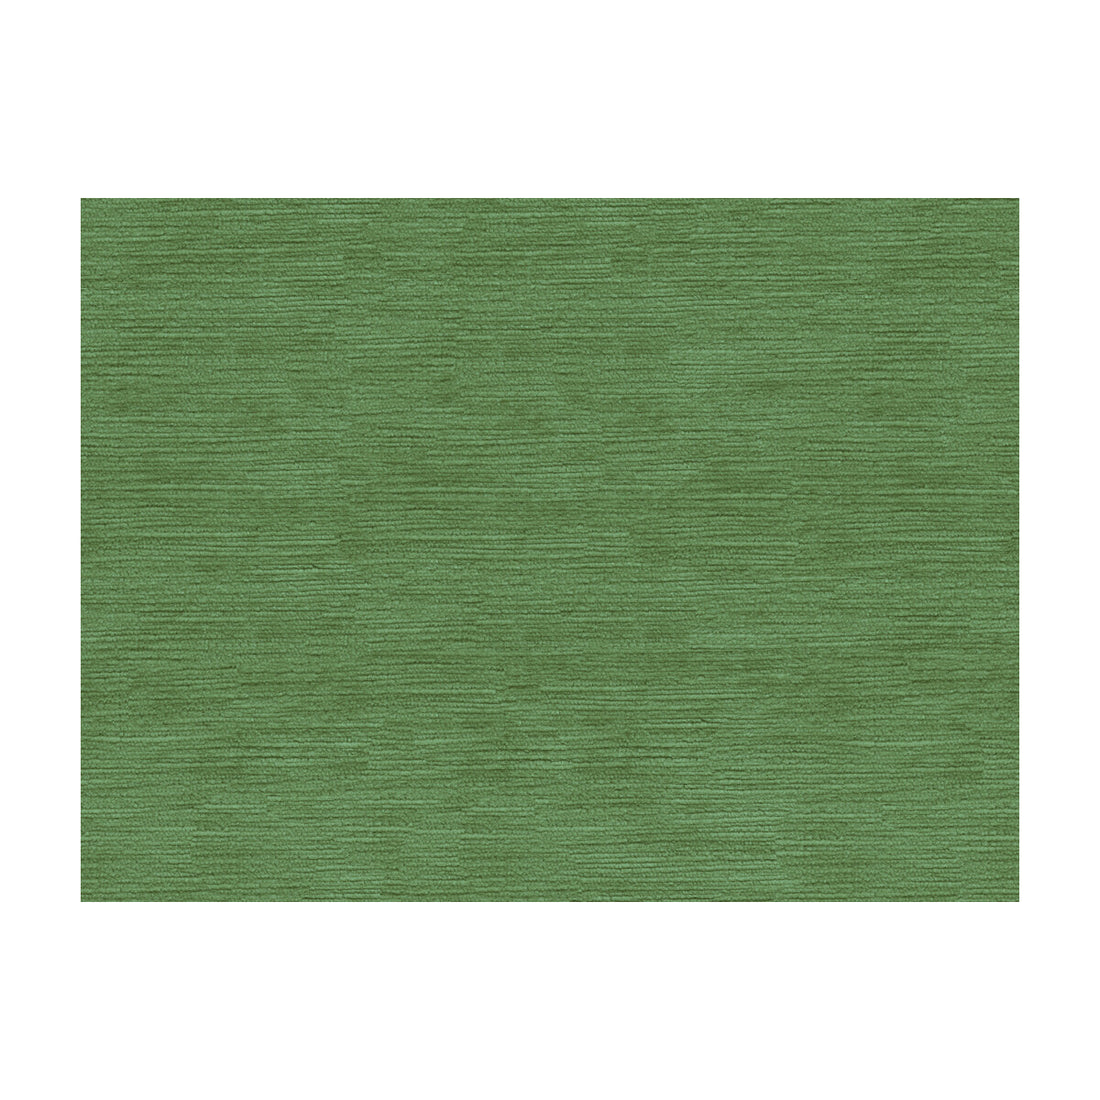 Thanon Linen Velvet fabric in winter green color - pattern BR-89776.467.0 - by Brunschwig &amp; Fils